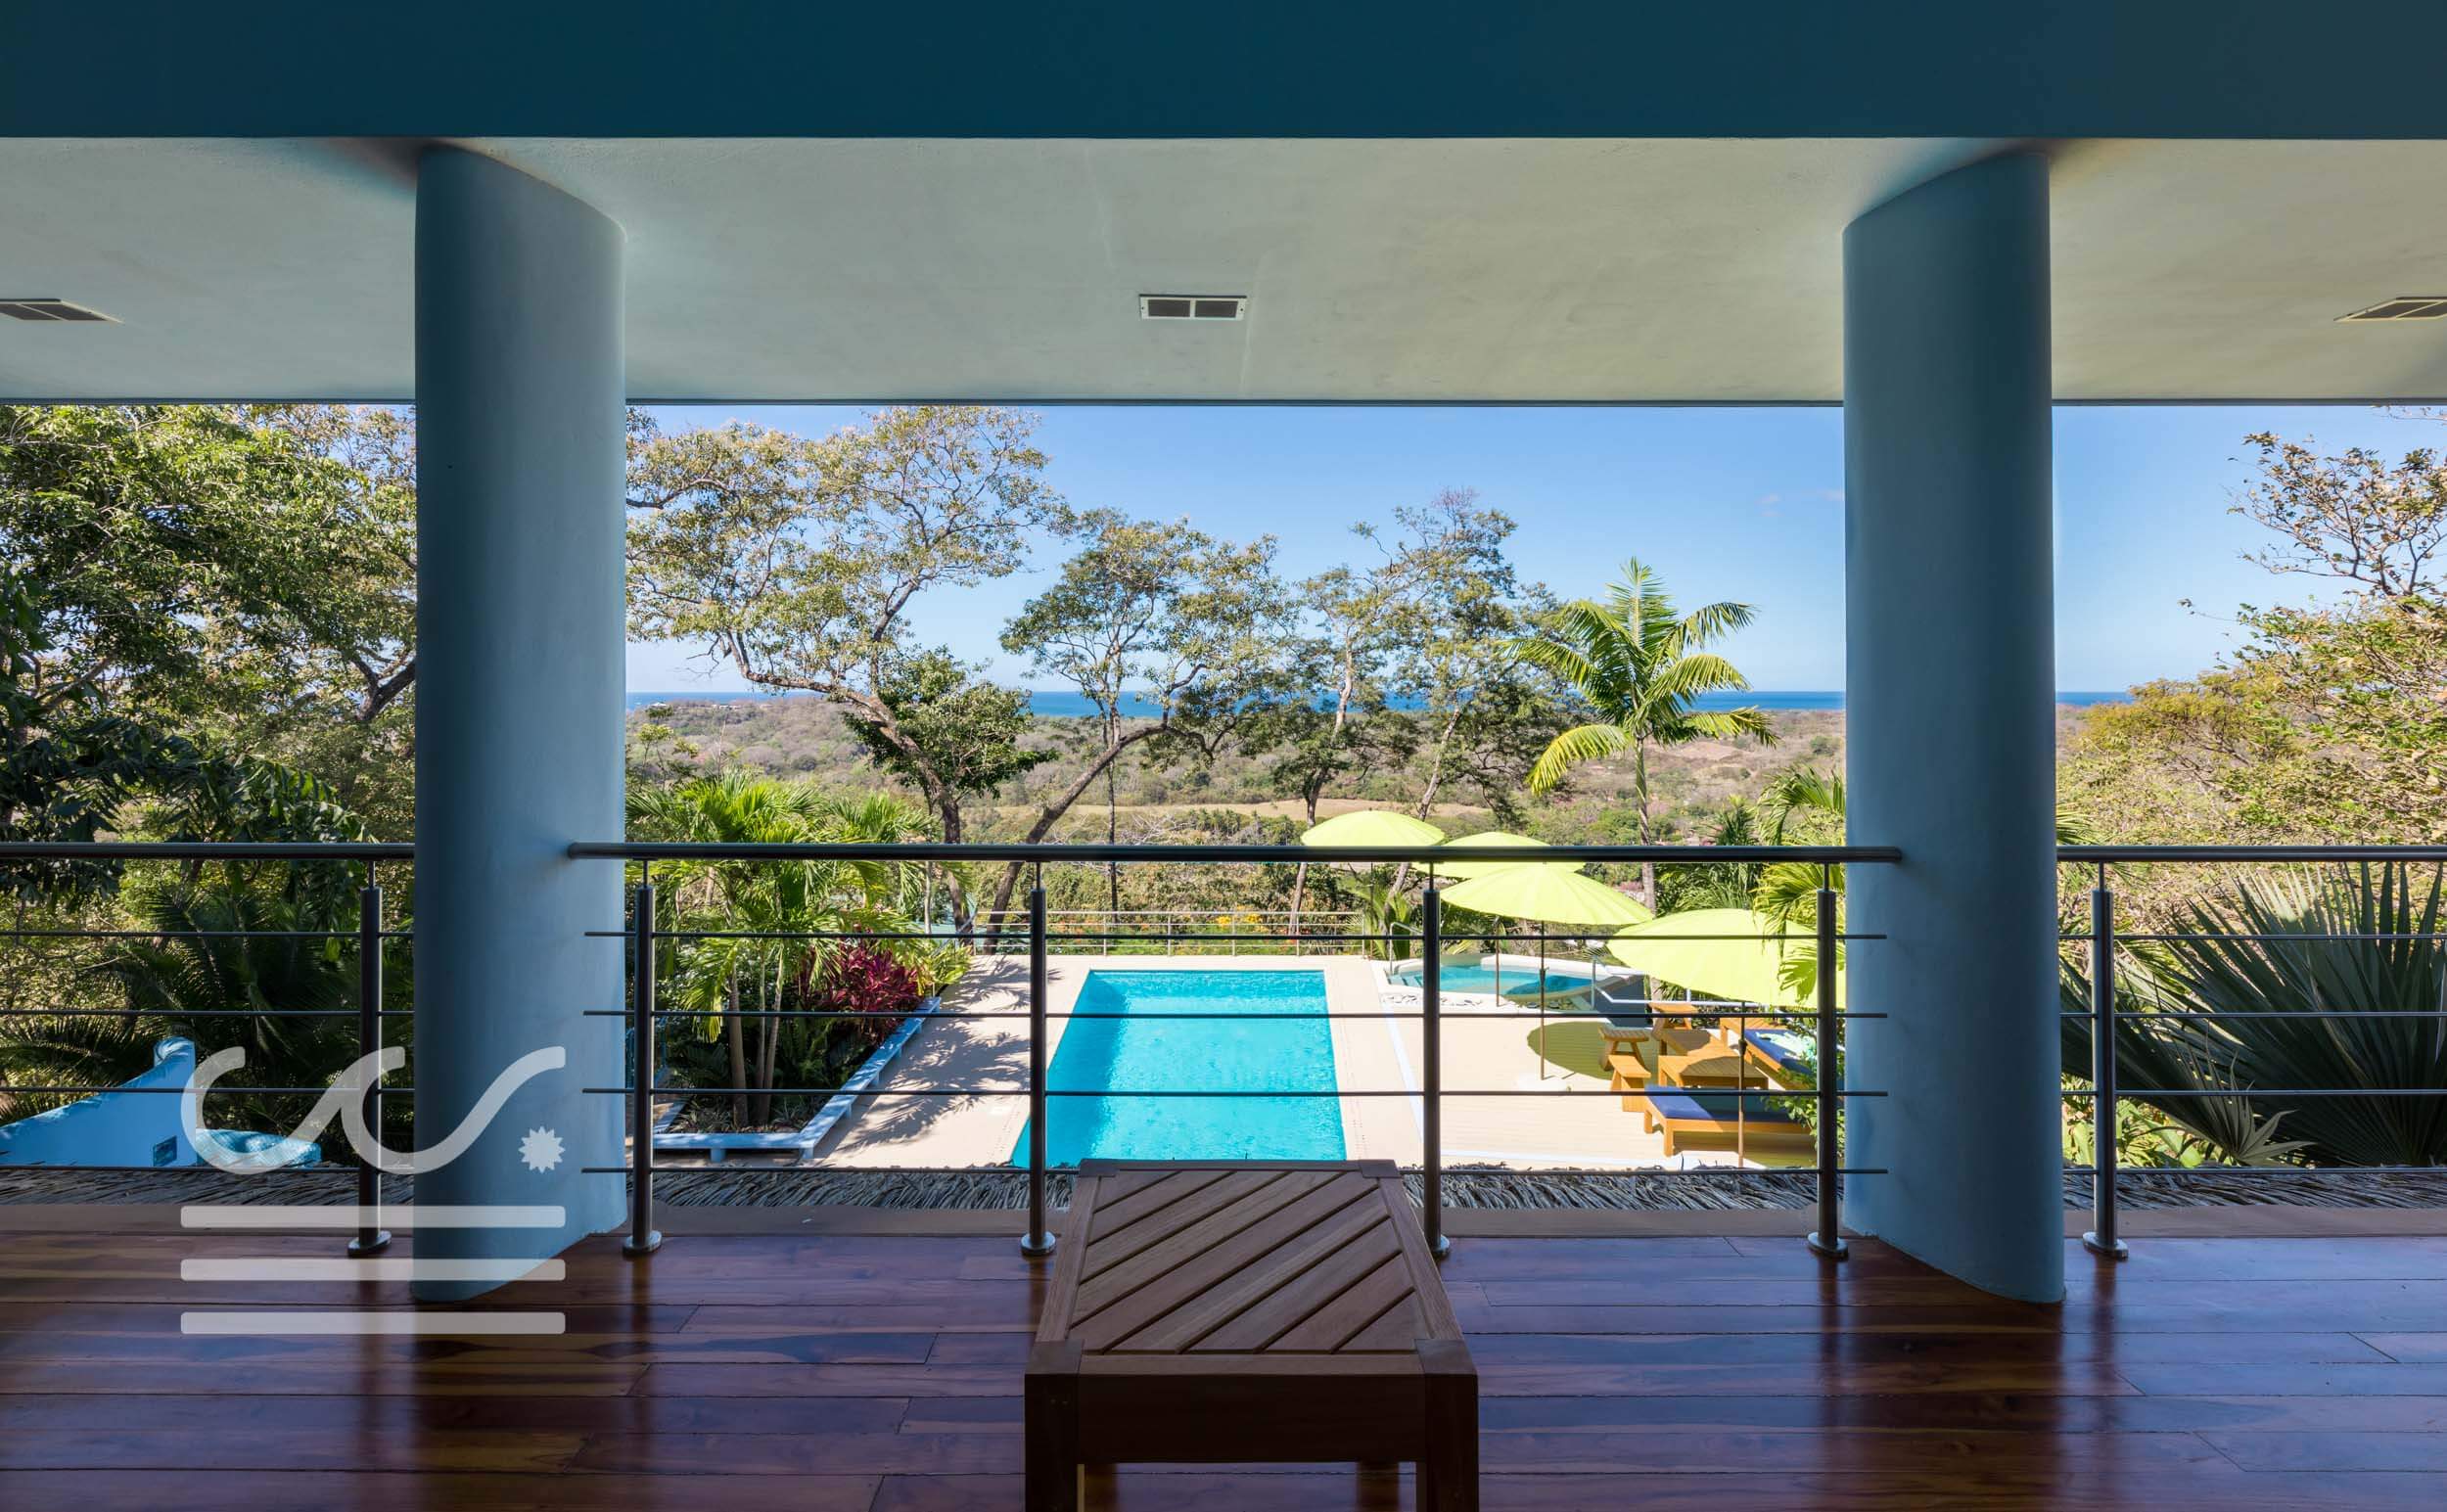 Pura-Vista-Wanderlust-Realty-Real-Estate-Nosara-Costa-Rica-5compressed.jpg